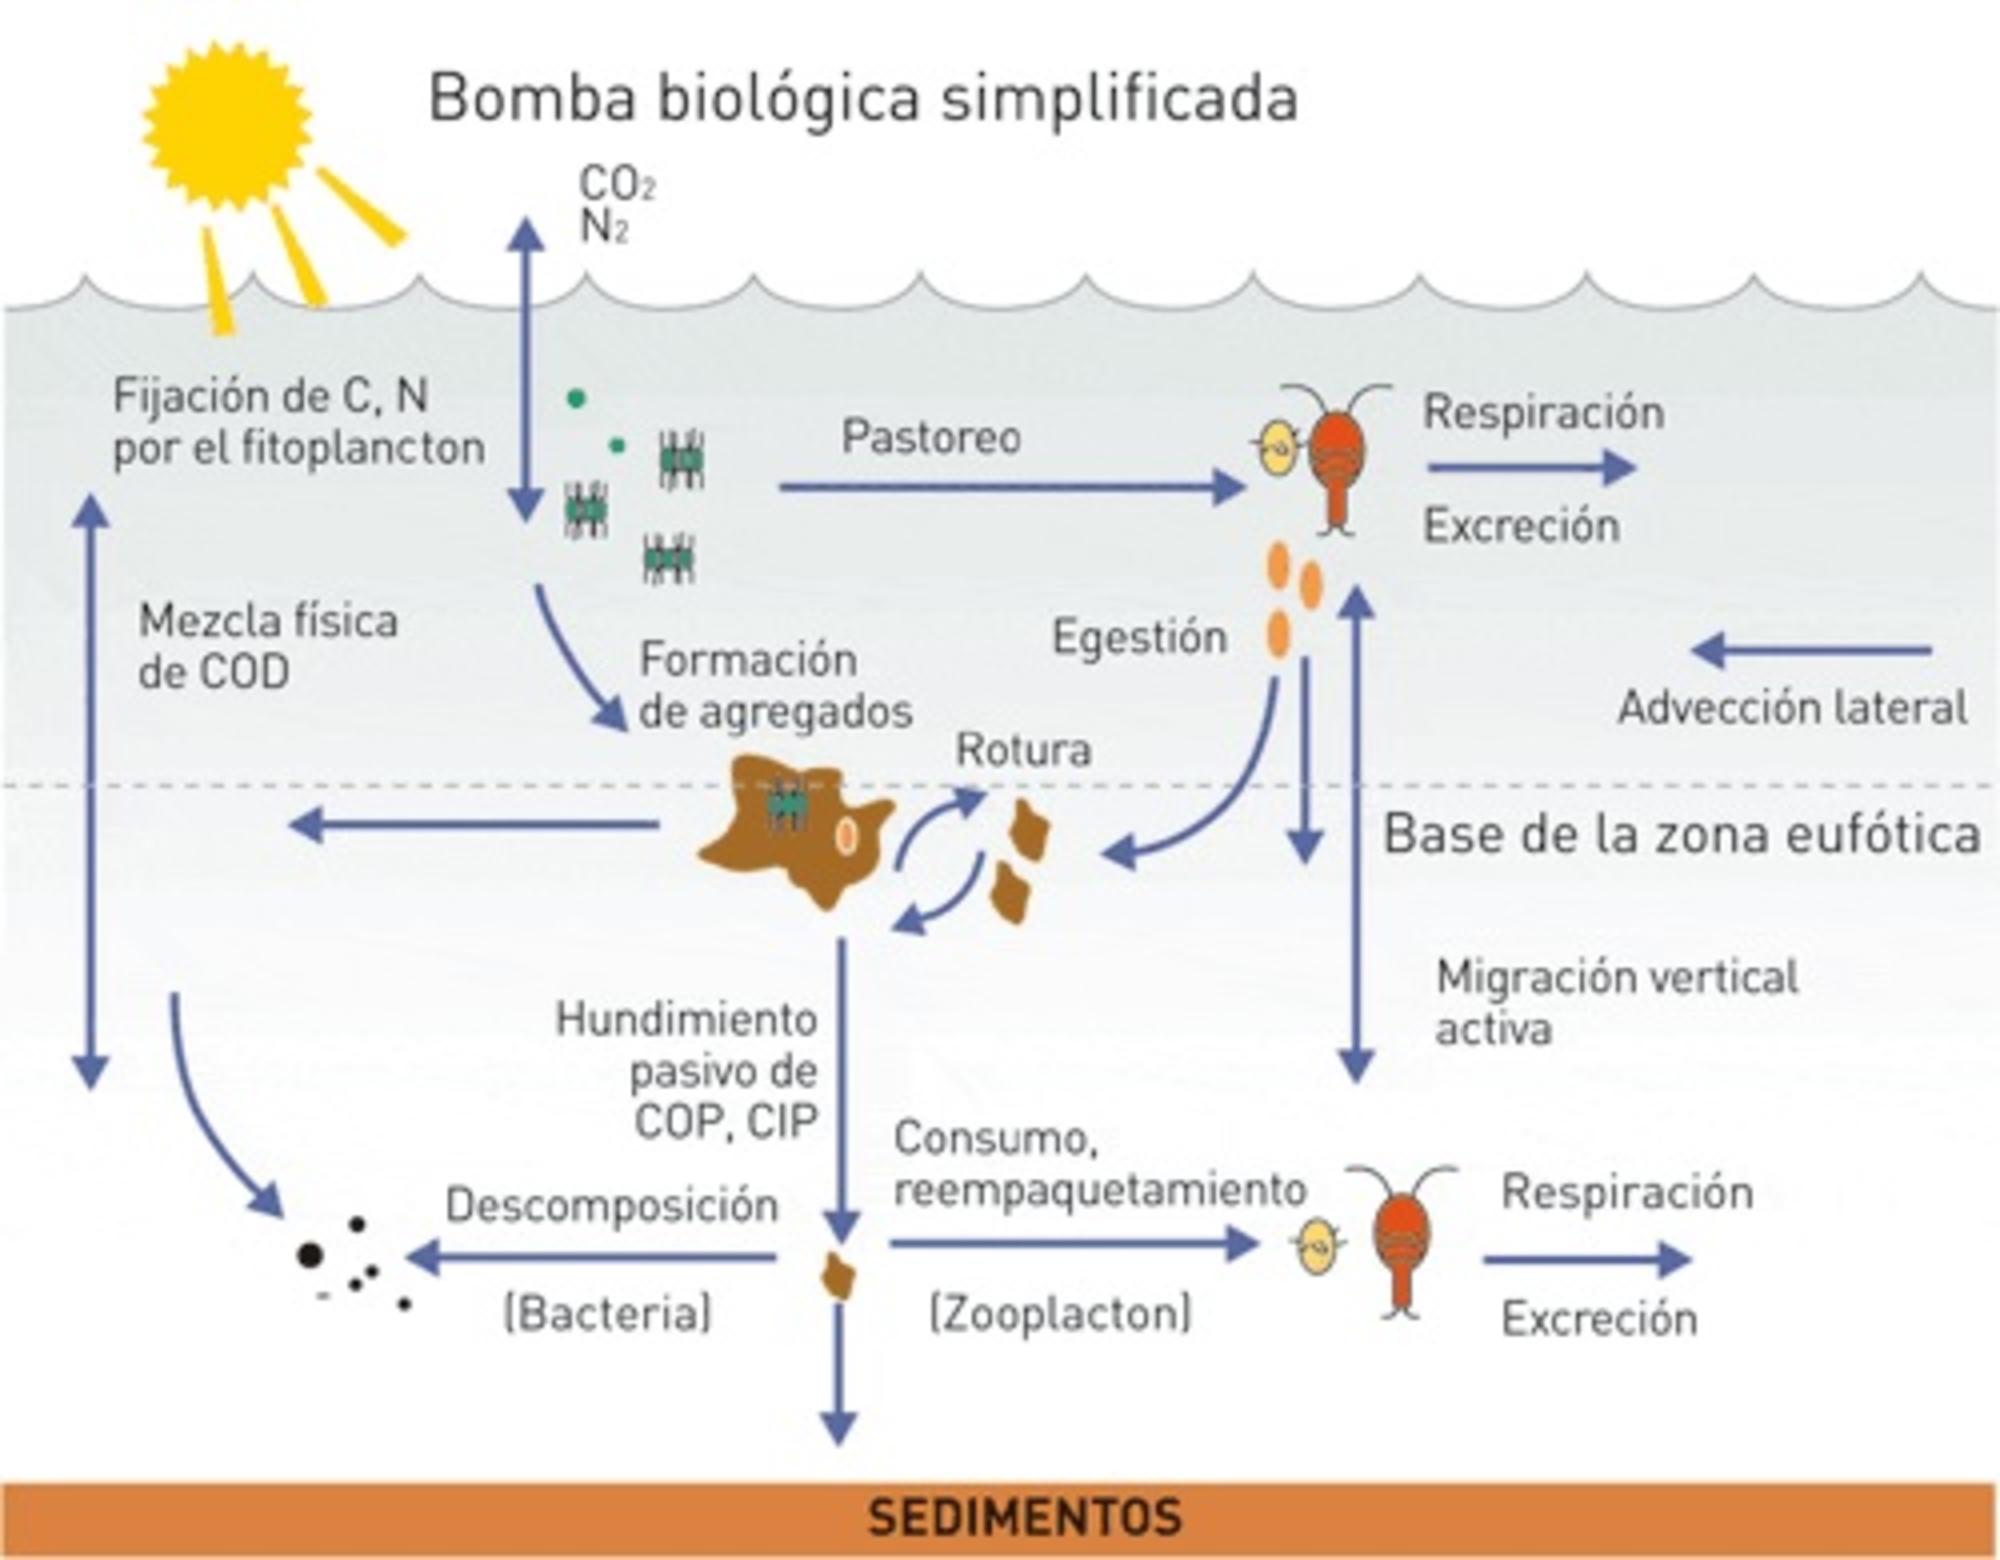 Bomba biológica simplificada